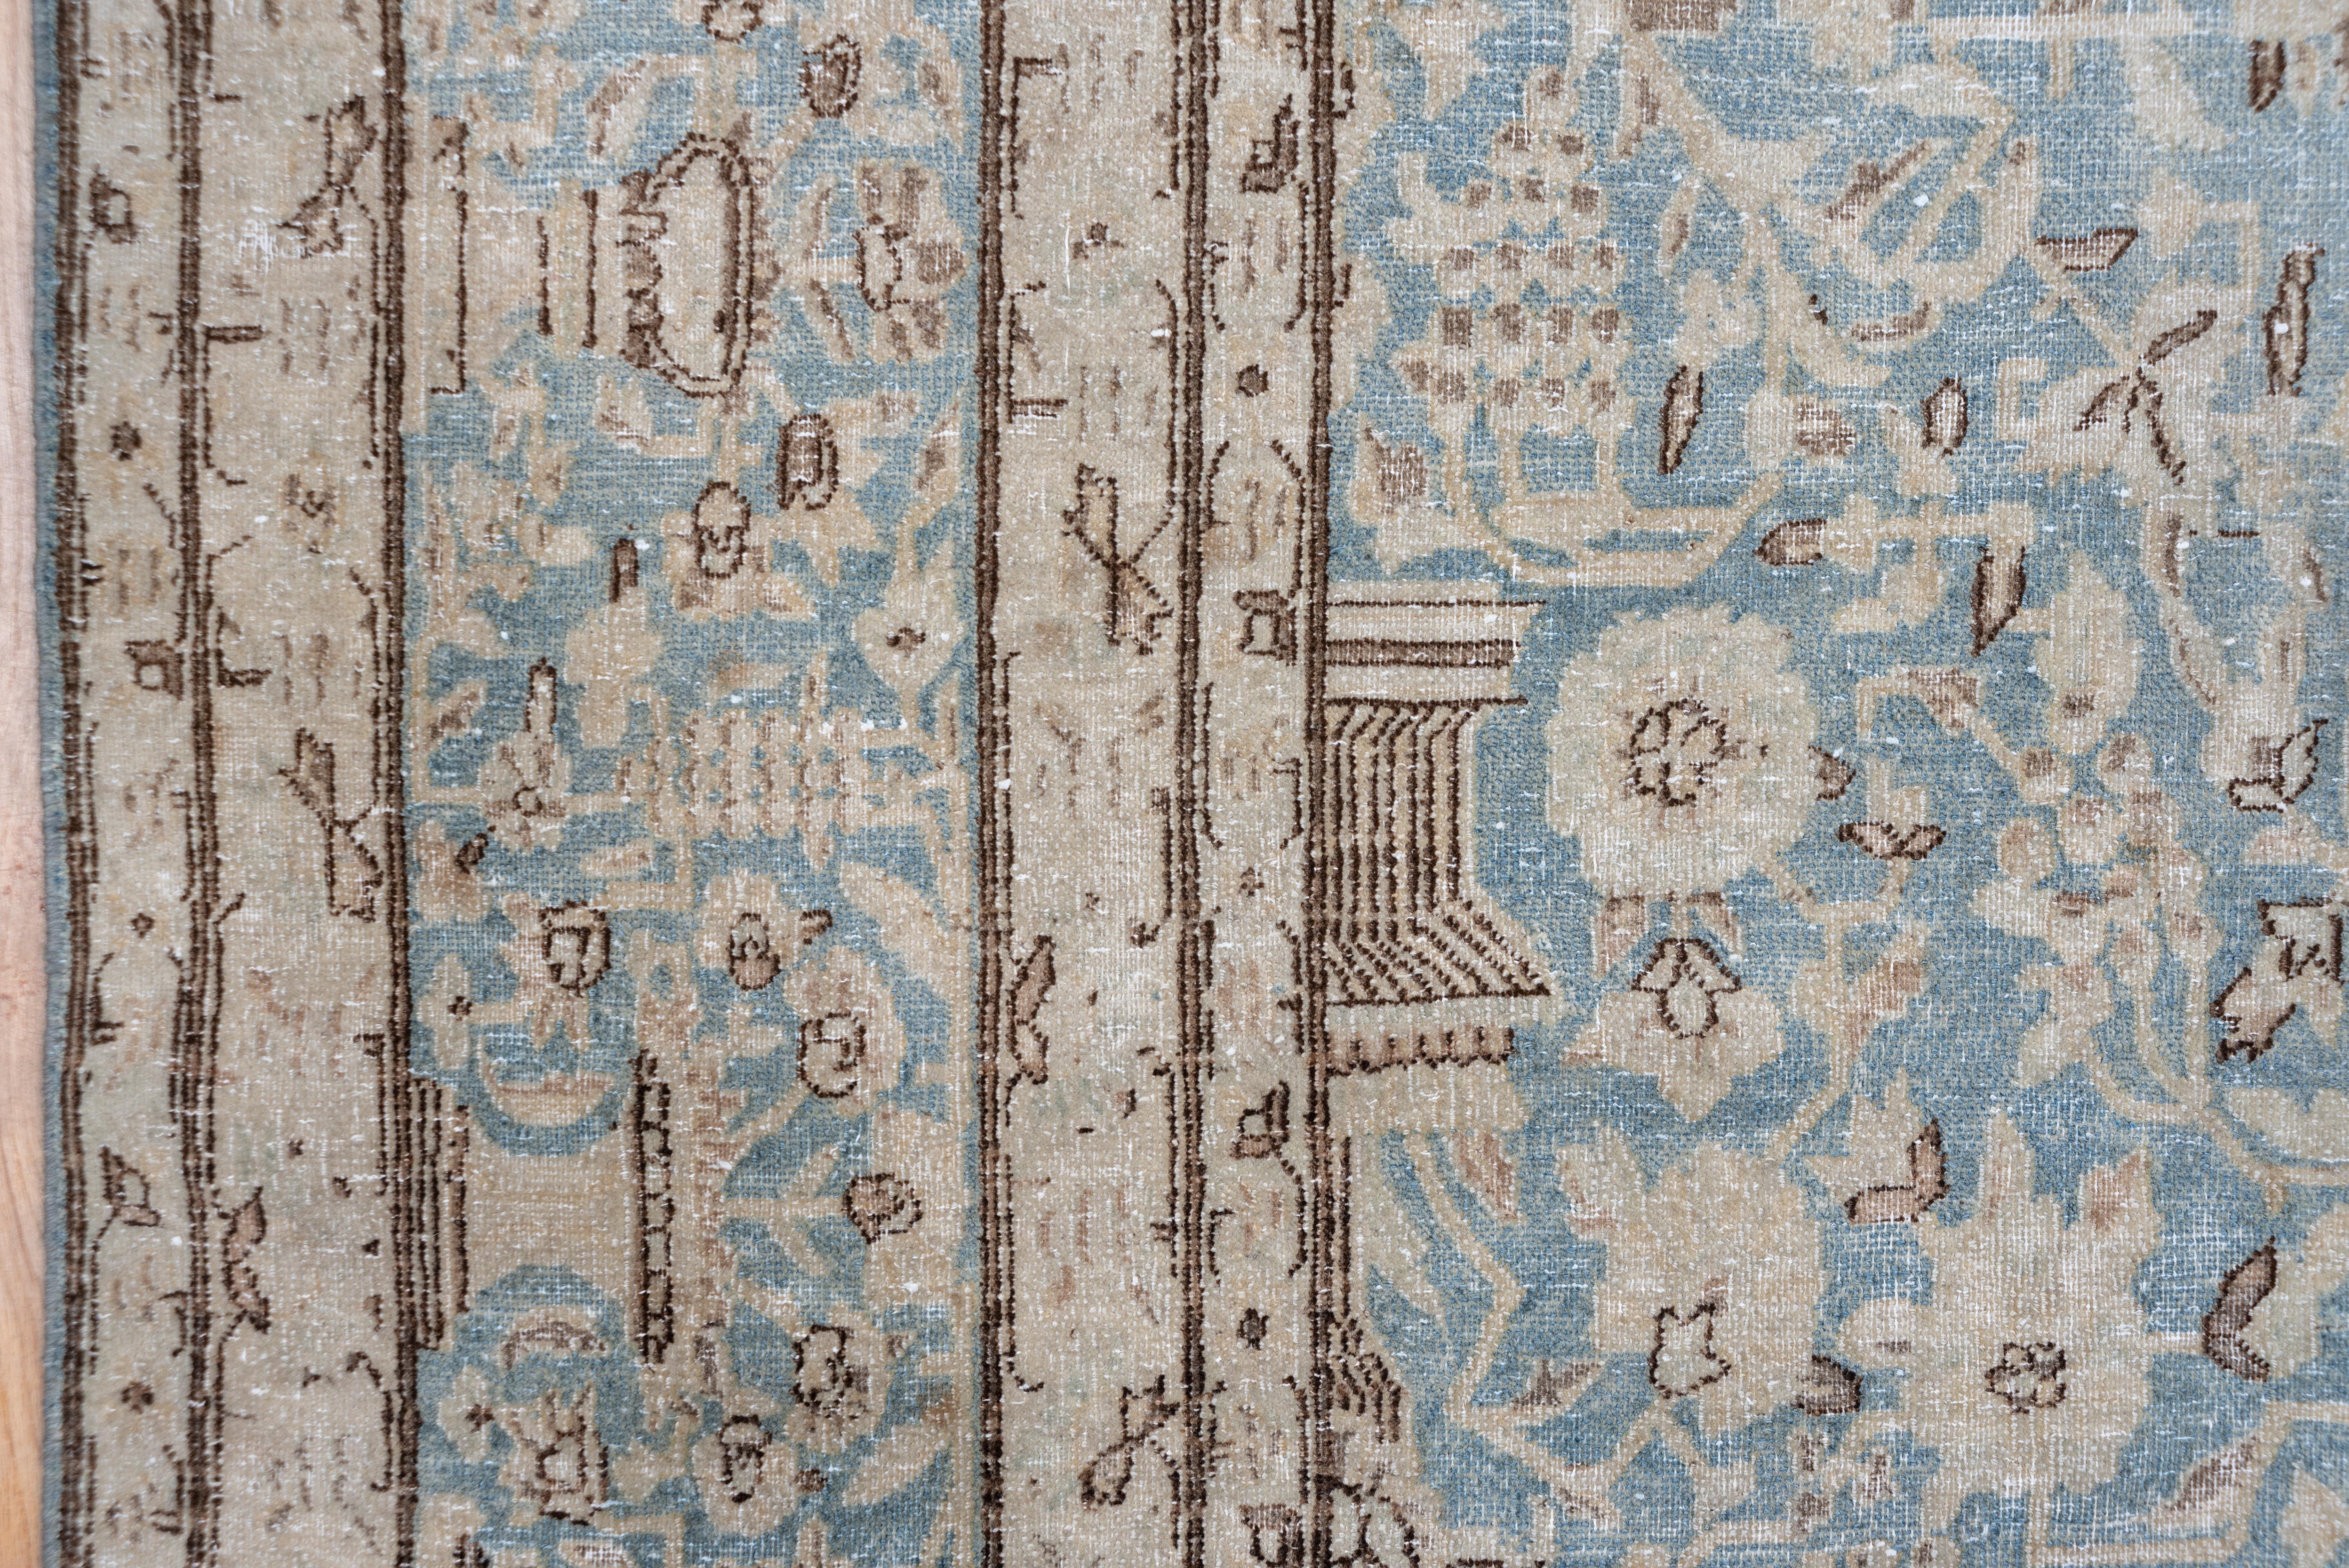 Light Blue Antique Persian Kerman Carpet with Vase Design, Allover Field For Sale 2